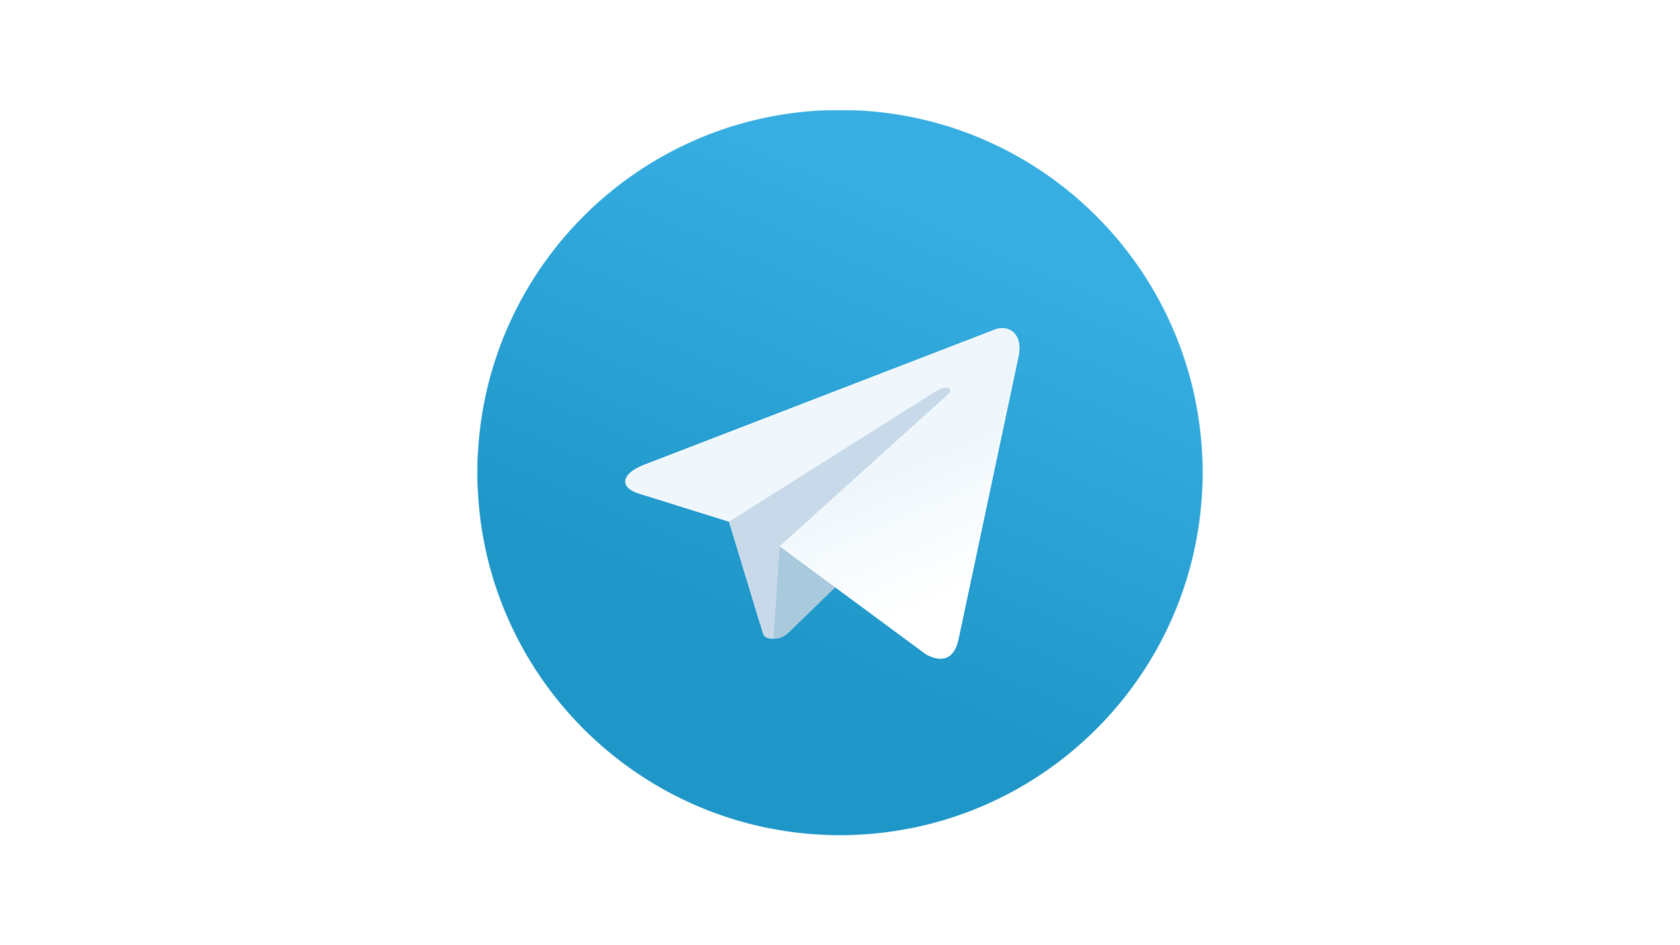 Значок телеграмм на экране. Телеграмм. Иконка телеграмм. Пиктограмма телеграмм. Логотип телеграм на прозрачном фоне.